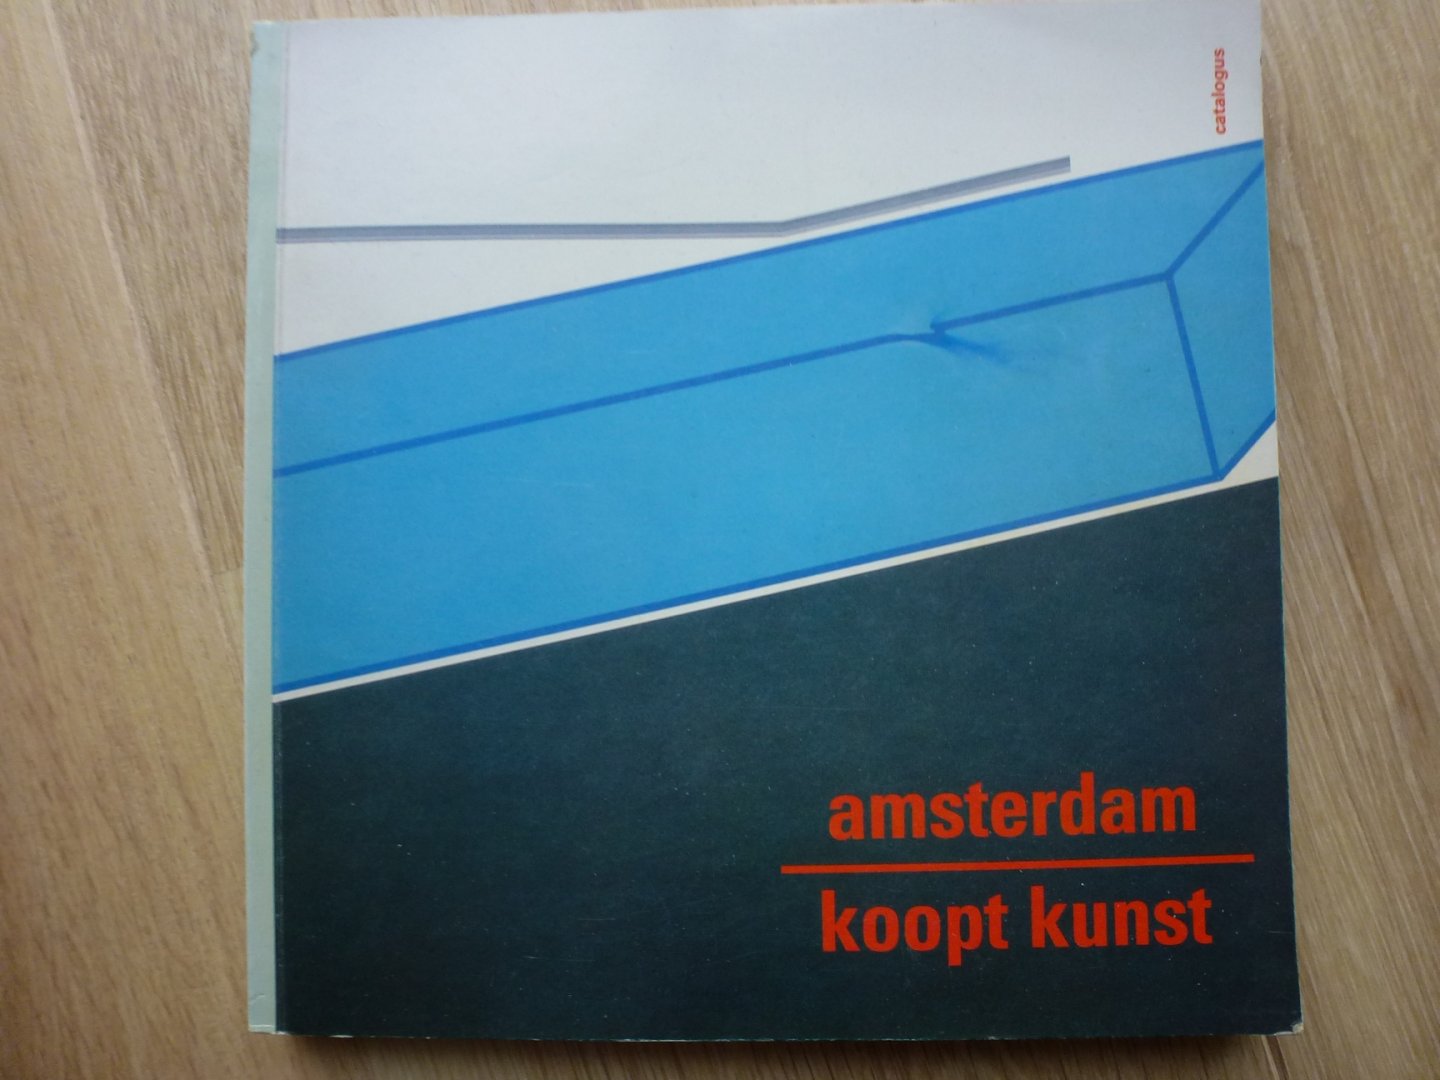  - Amsterdam koop kunst 1980